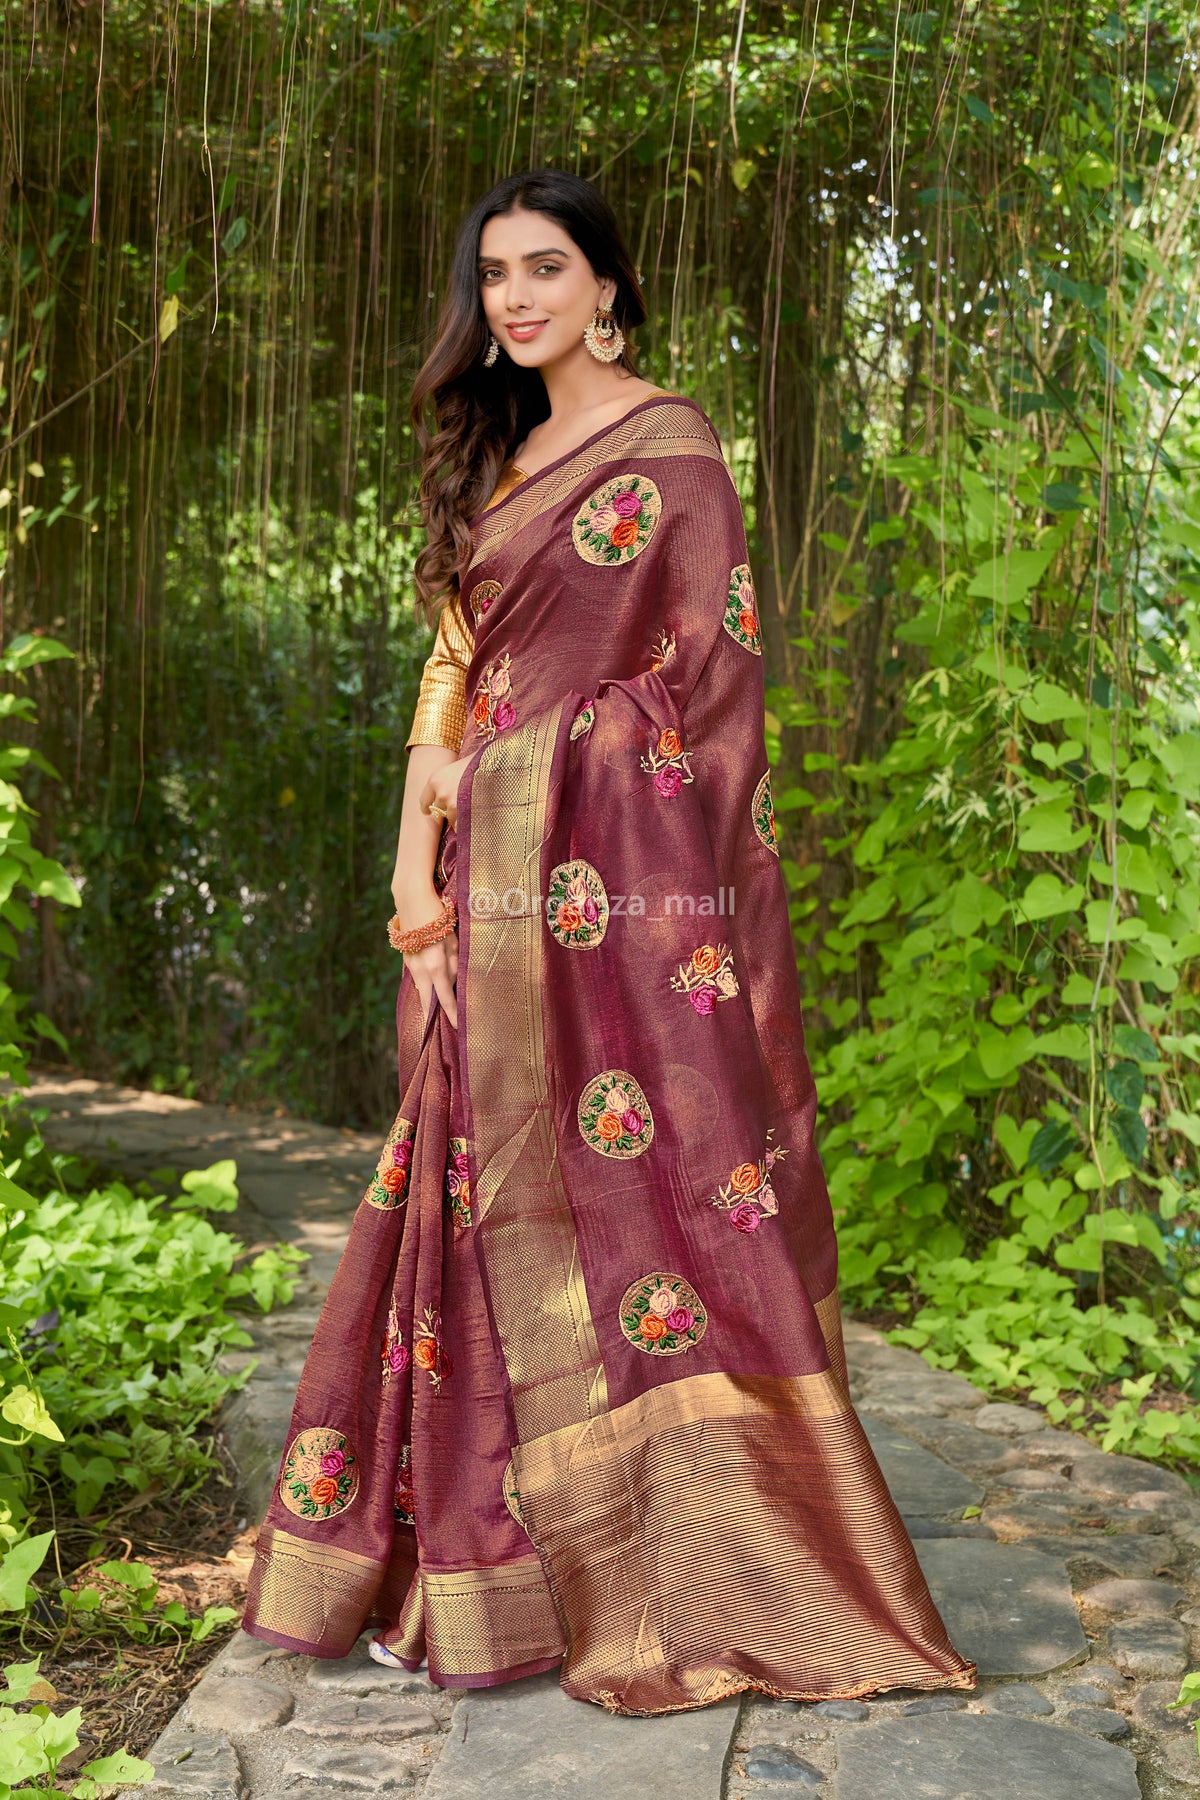 Maroon blouse | Saree blouse designs latest, Fashionable saree blouse  designs, Saree designs